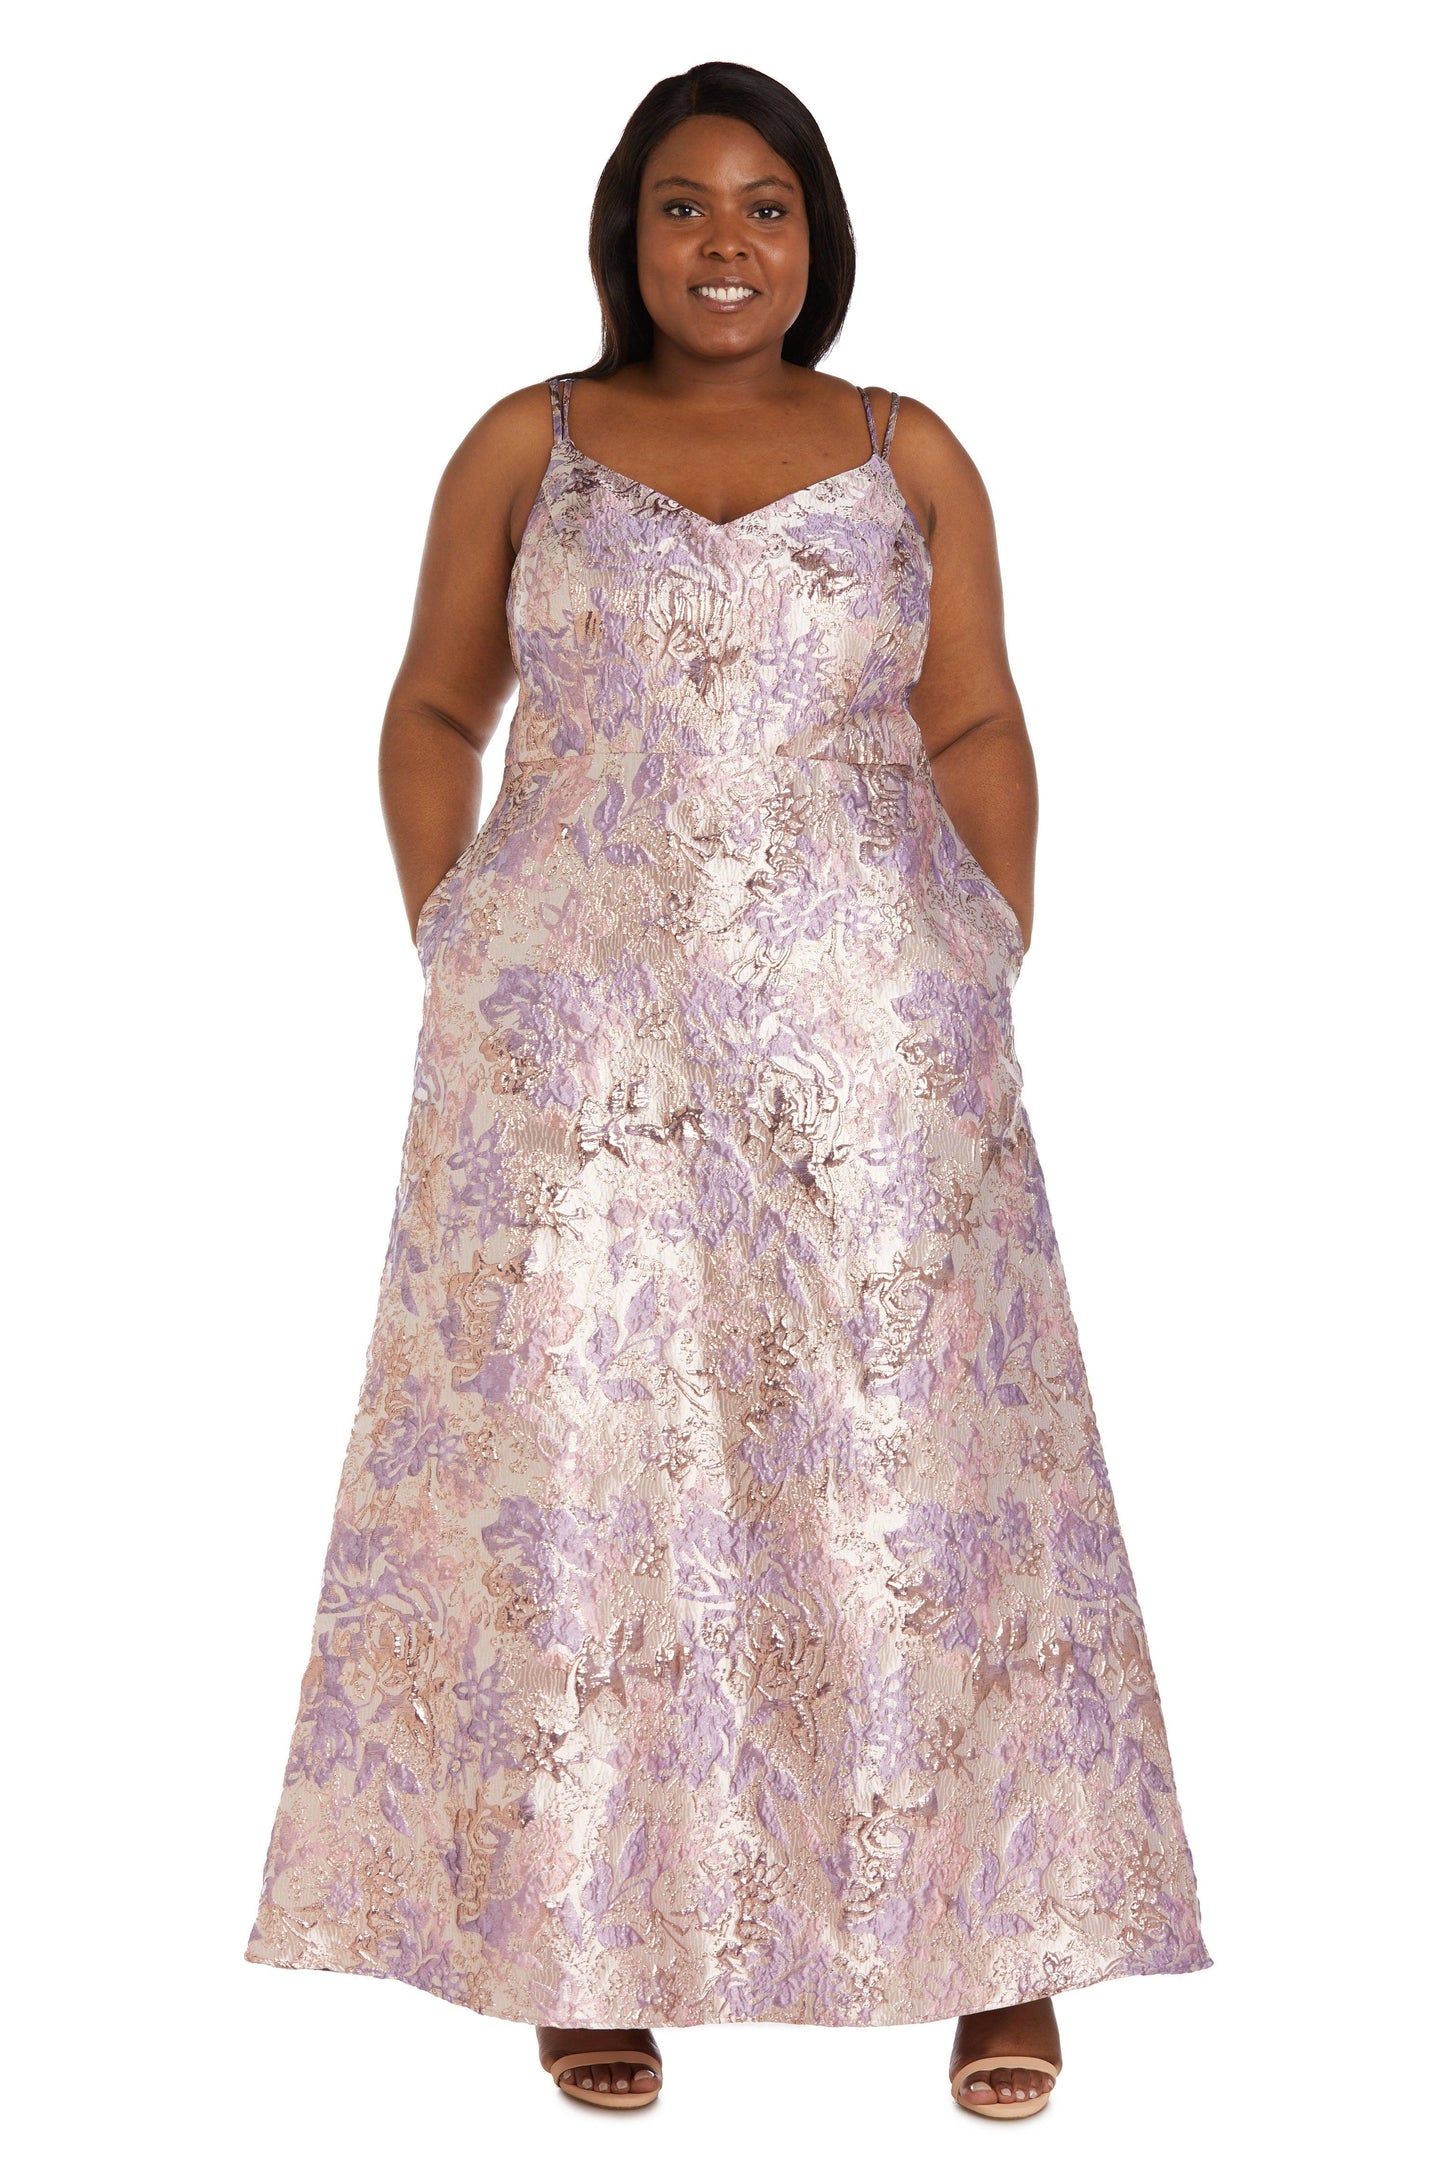 Nightway Plus Size Long Formal Prom Dress 22133W